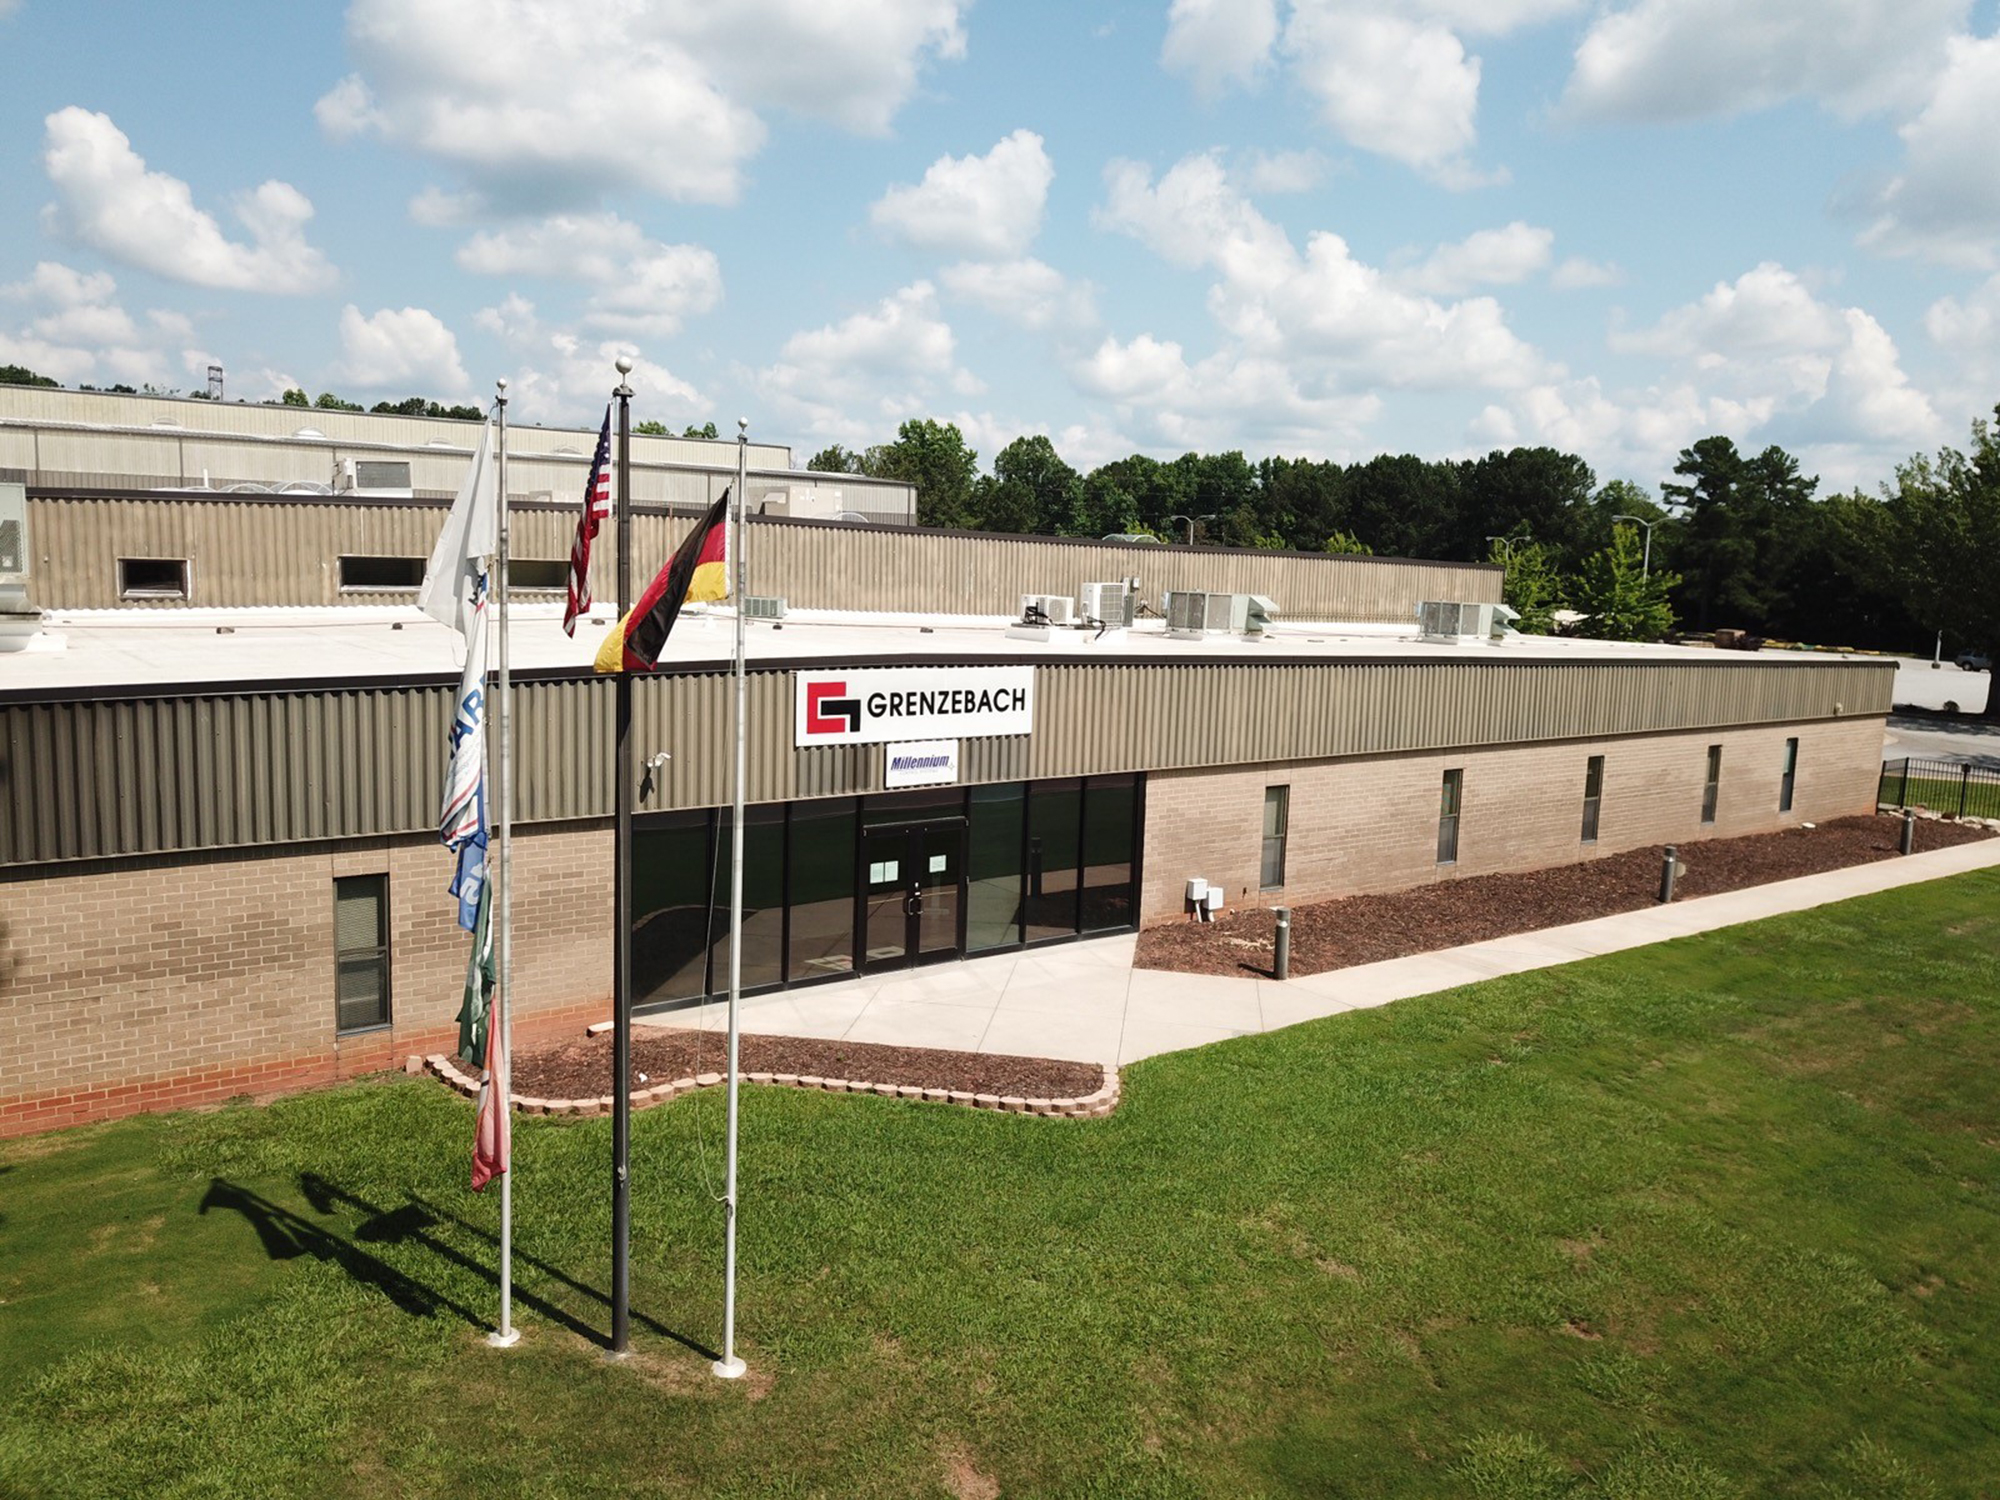 1988 Gründung der Grenzebach Corporation in Newnan, Georgia